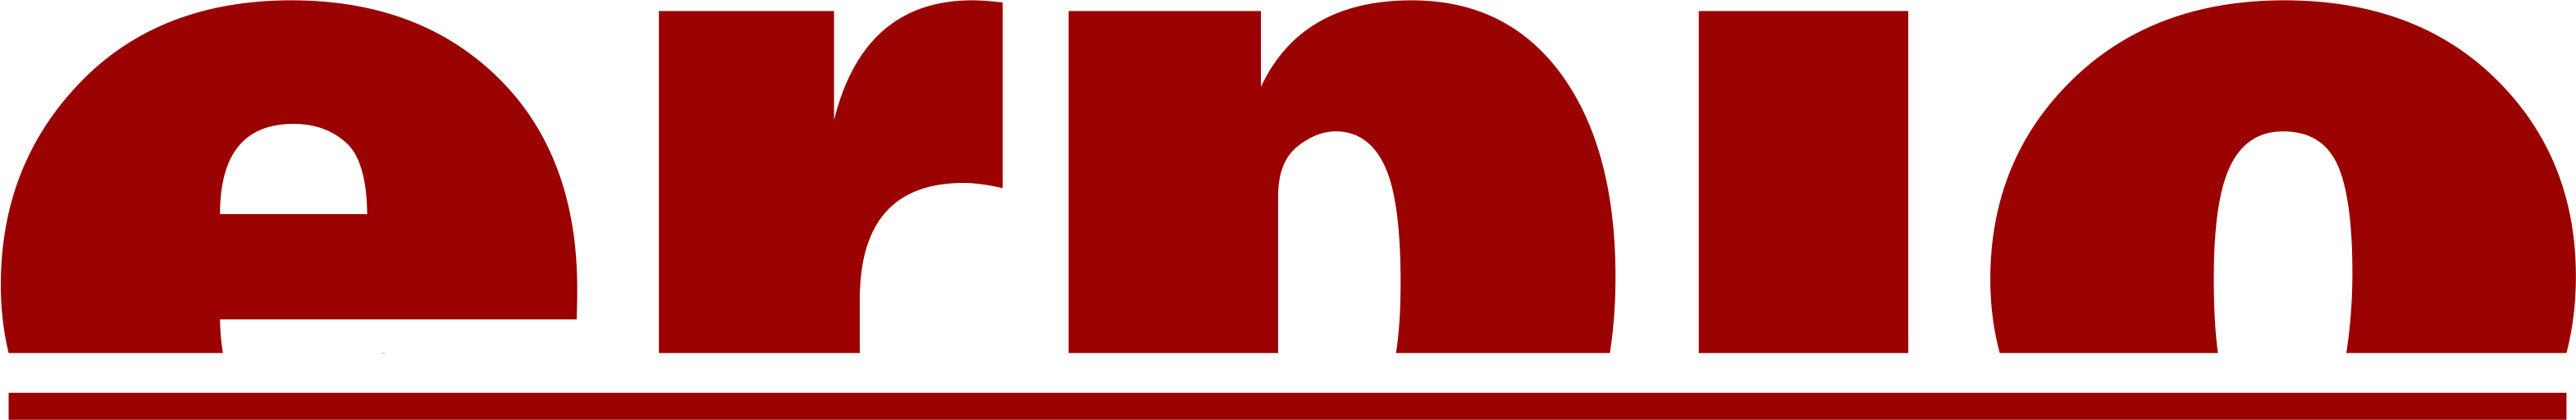 erpio-logo-half-v5-1